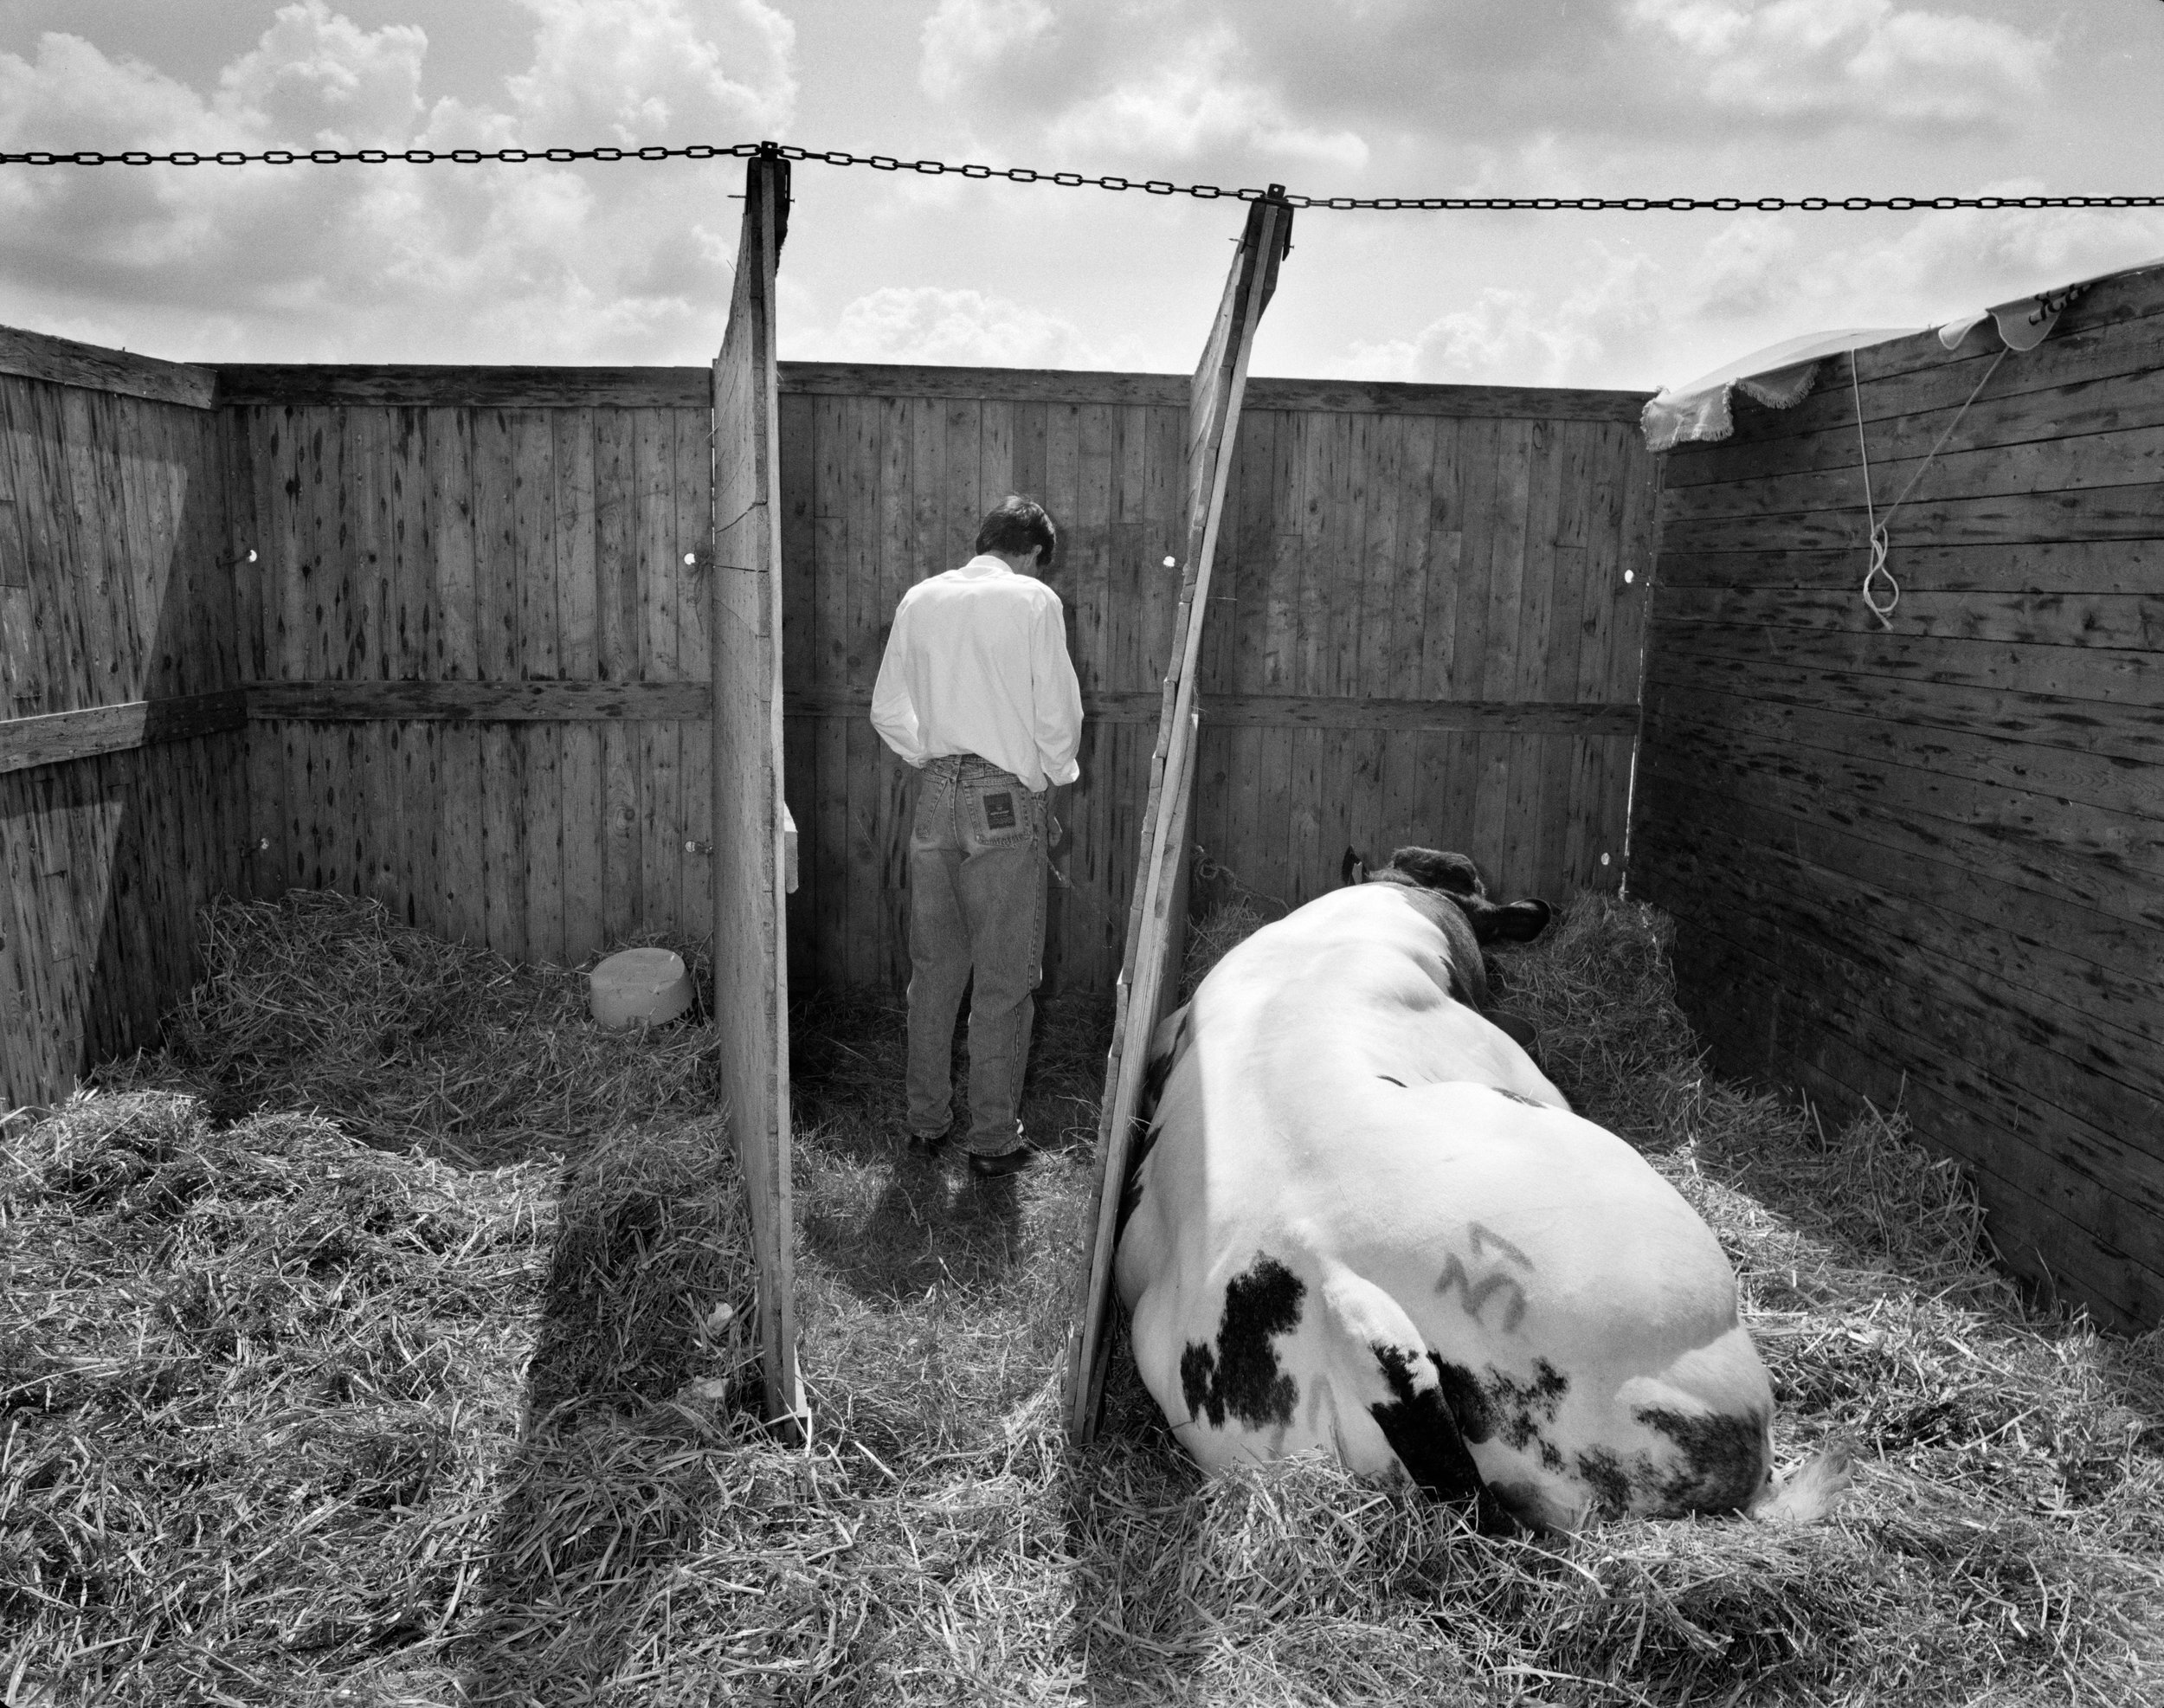 Rural Belgium 1992